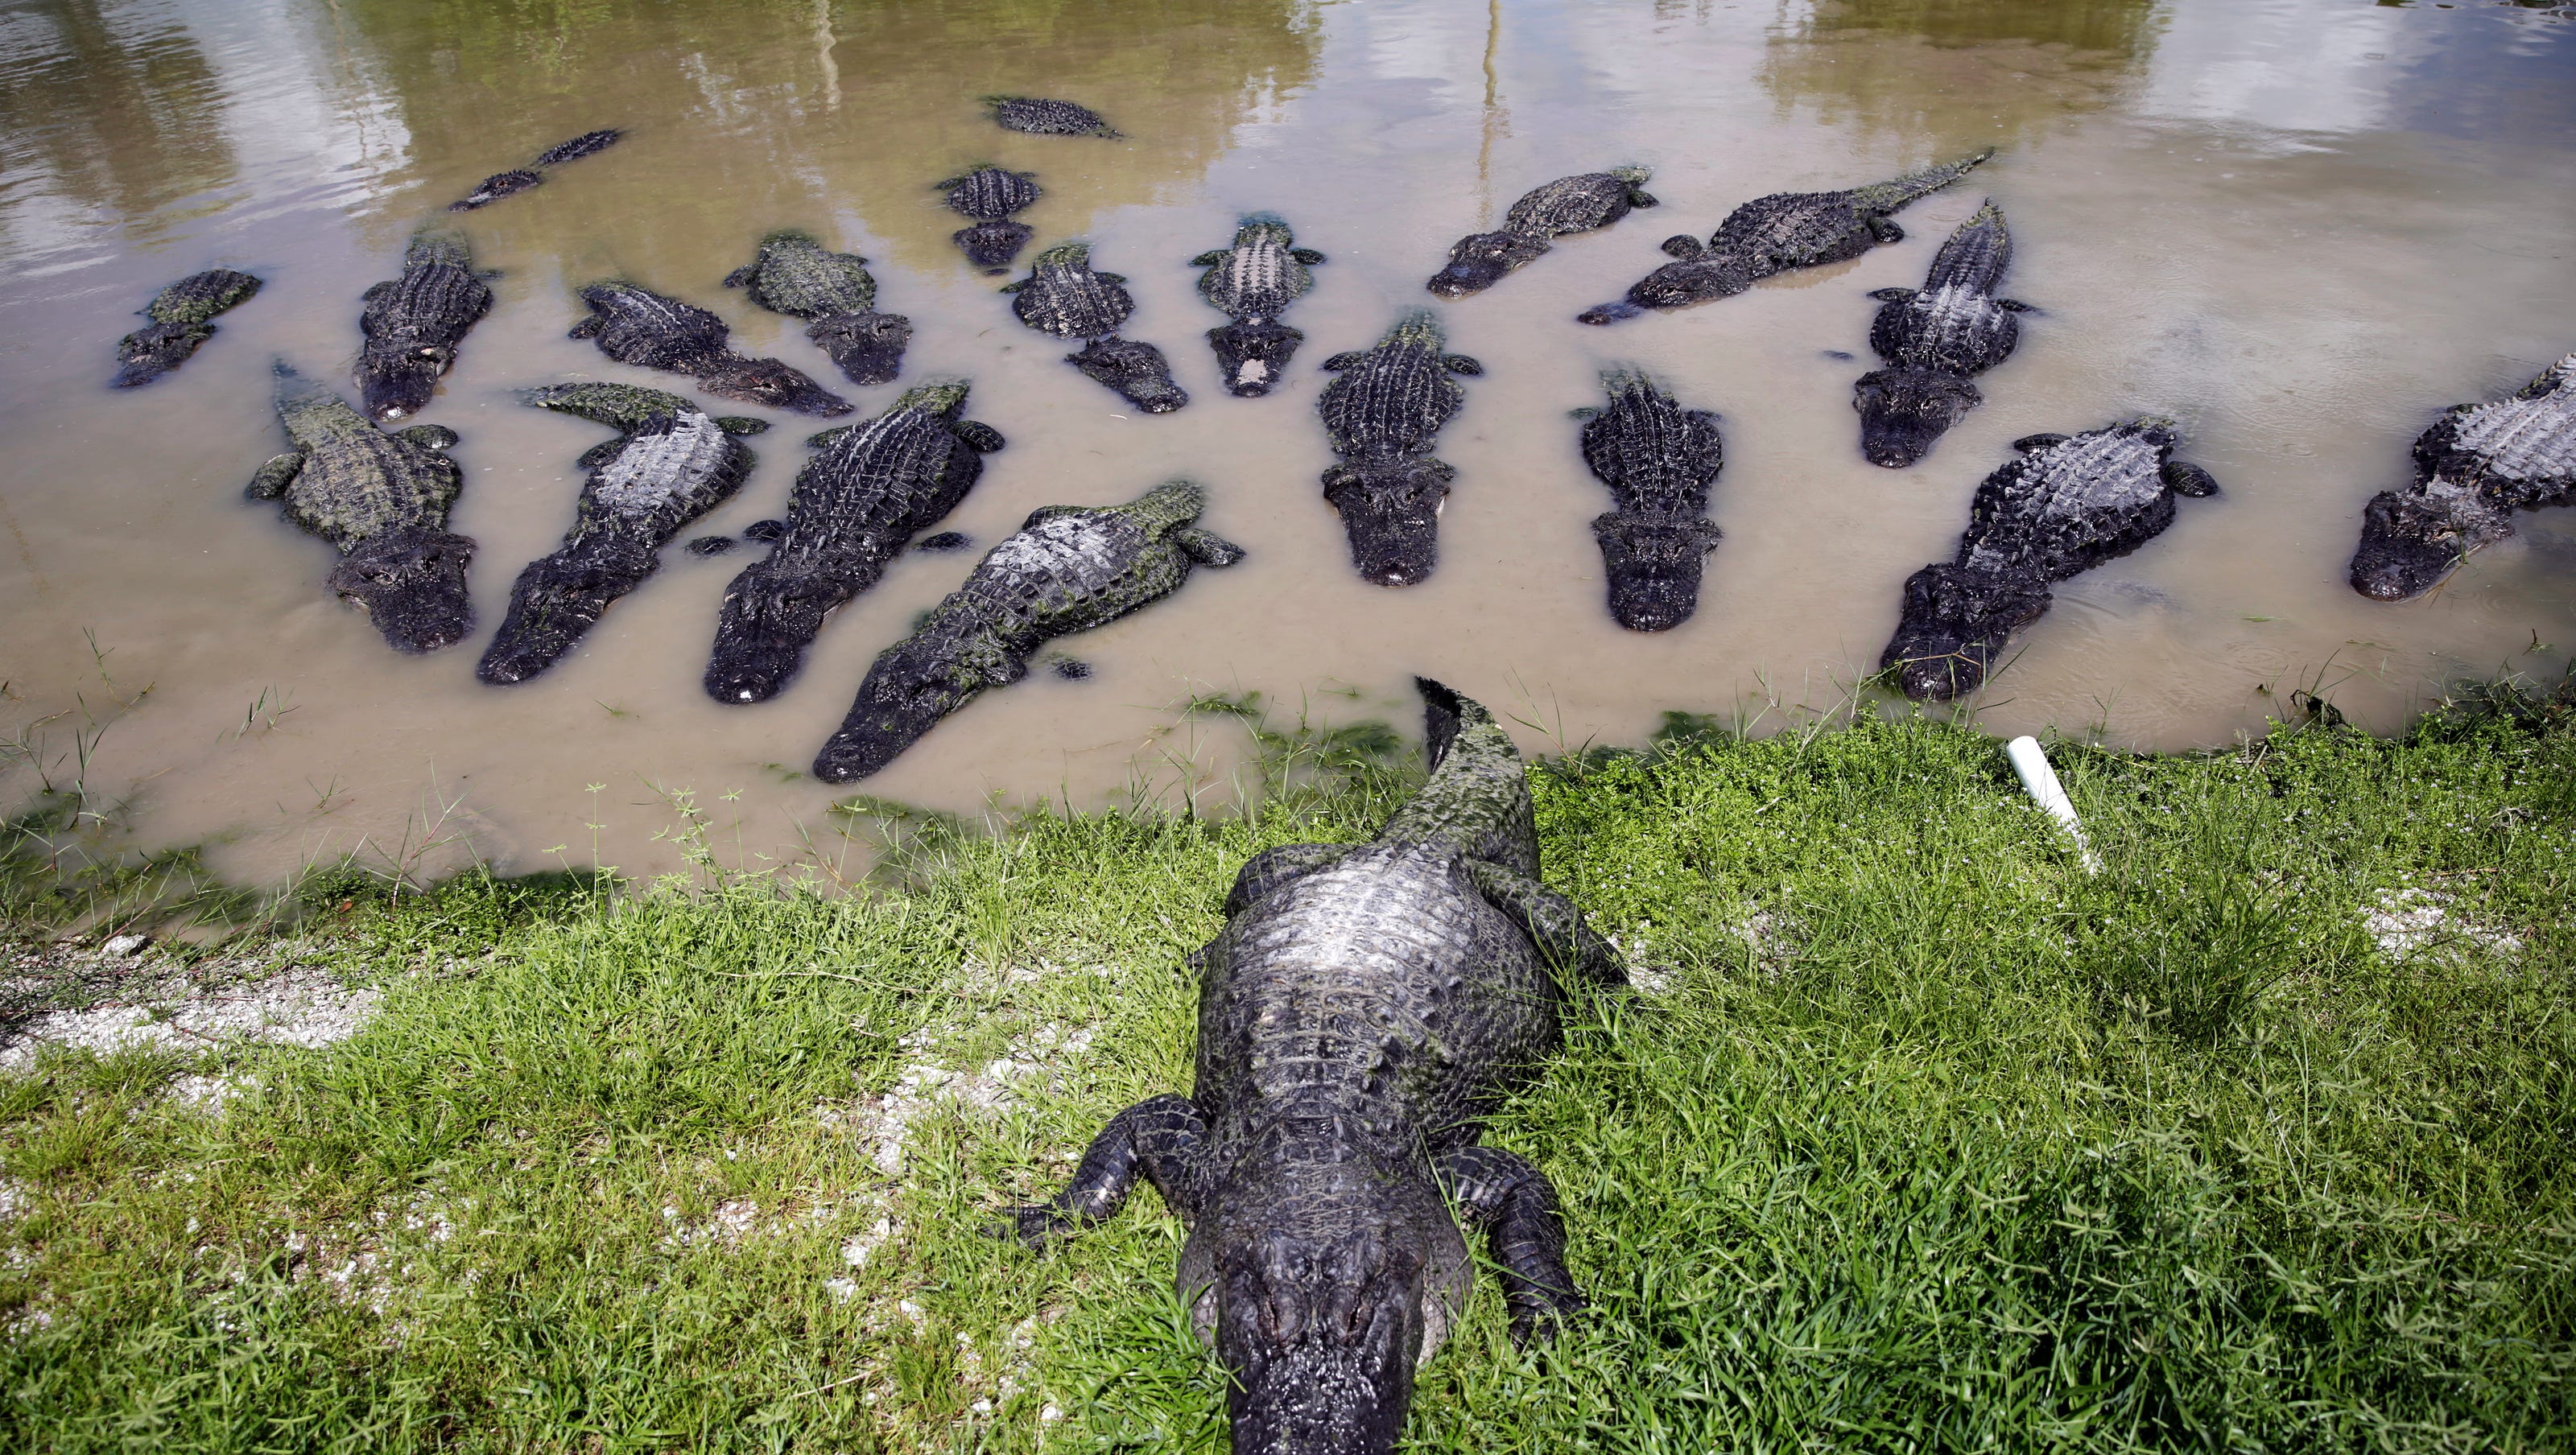 Can Alligators See?